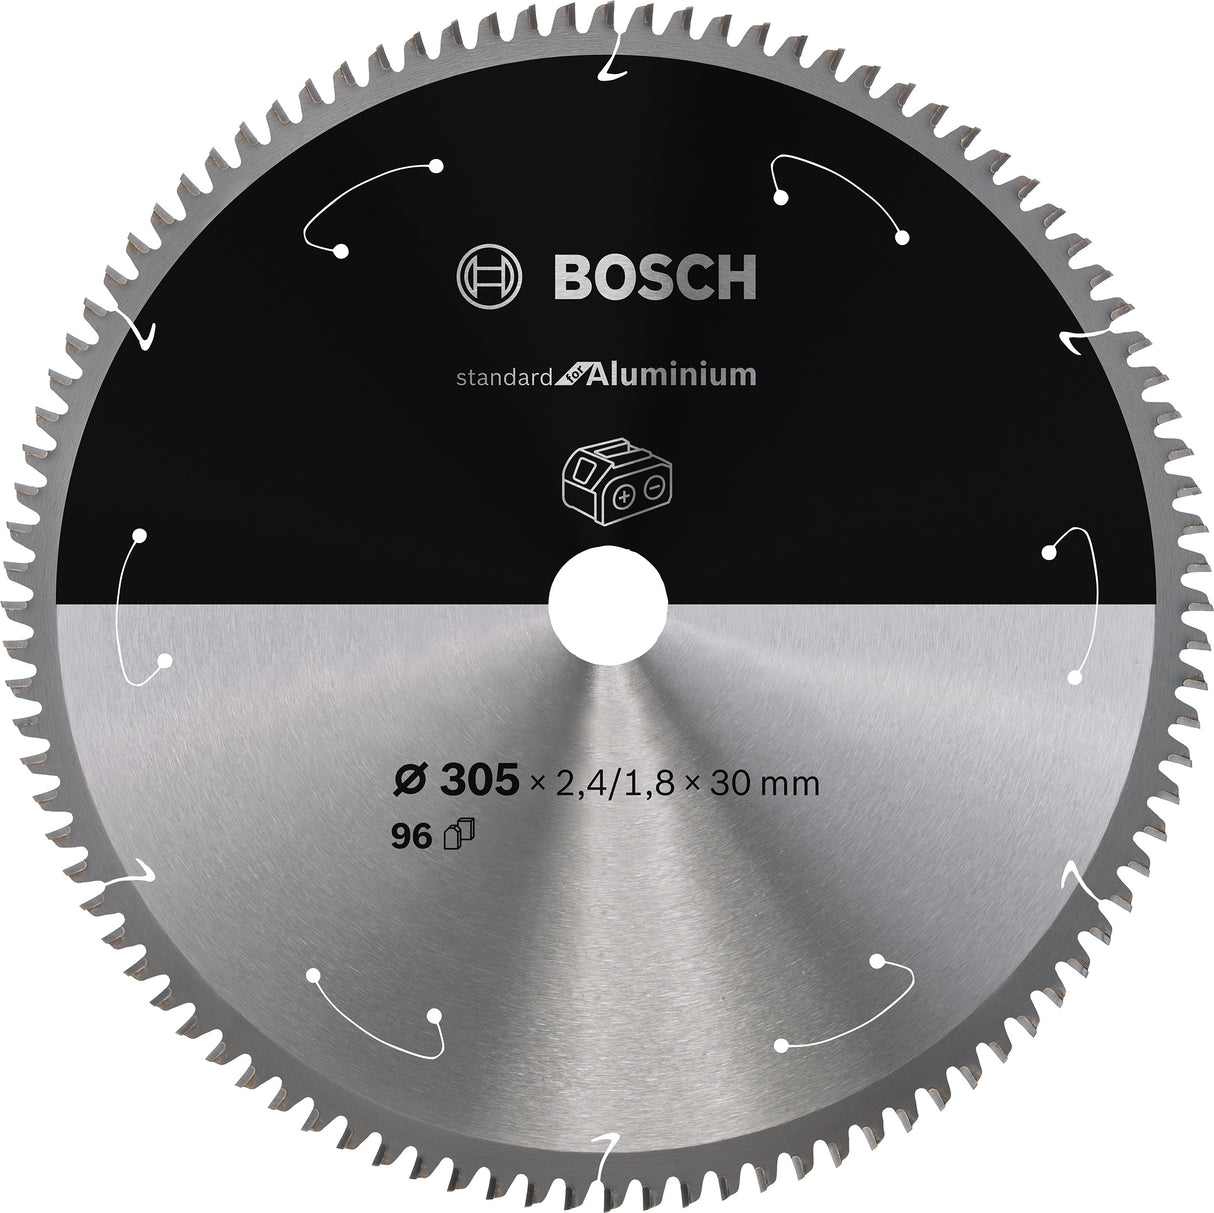 Bosch Professional Aluminium Circular Saw Blade for Cordless Saws - 305x2.4/1.8x30 T96 - Standard Grade